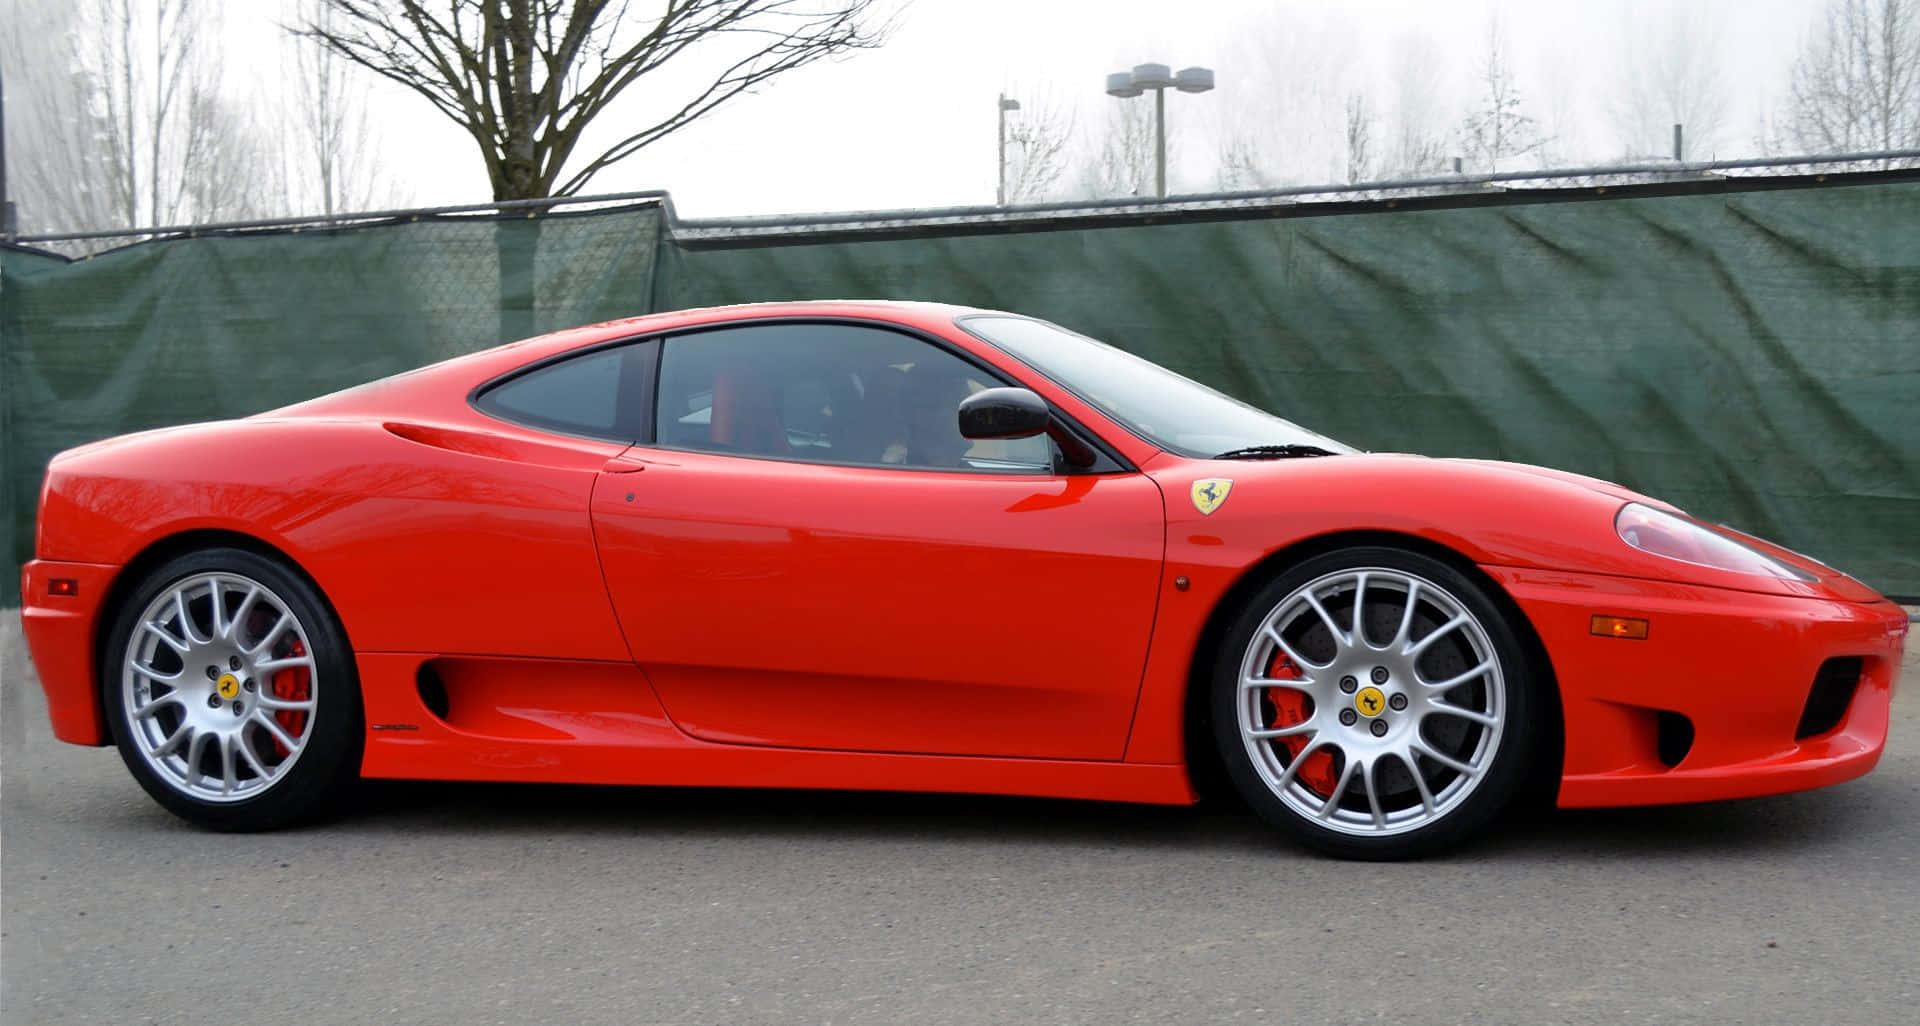 Stunning Ferrari 360 Modena in Action Wallpaper